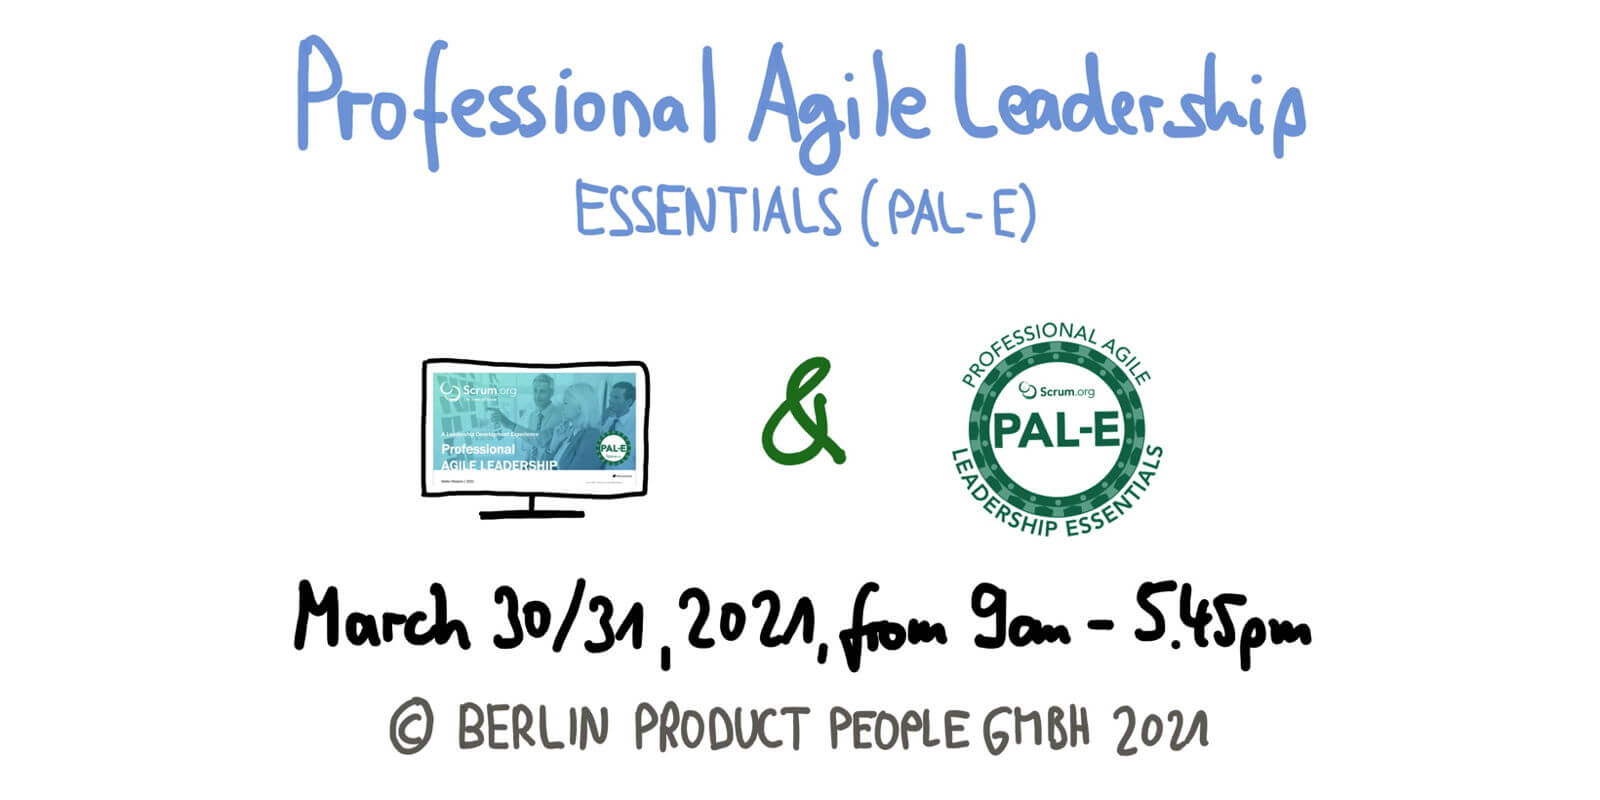 🖥 Professional Agile Leadership Essentials Schulung mit PAL-E Zertifikat — 30. bis 31. März 2021 — Berlin Product People GmbH